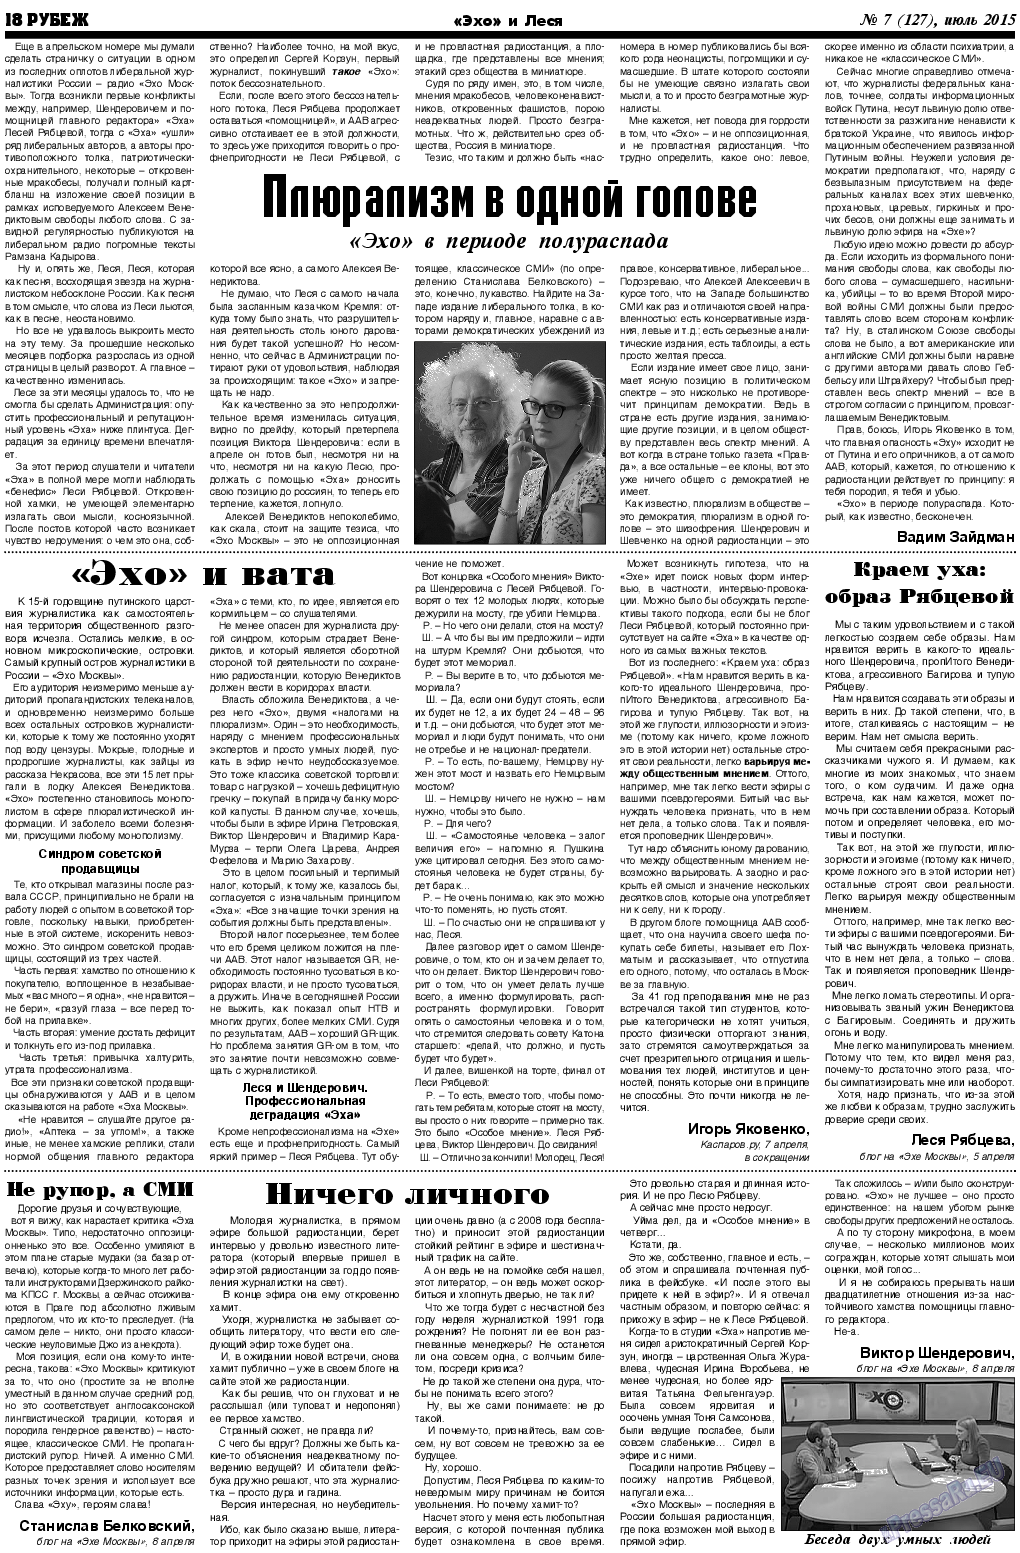 Рубеж, газета. 2015 №7 стр.18